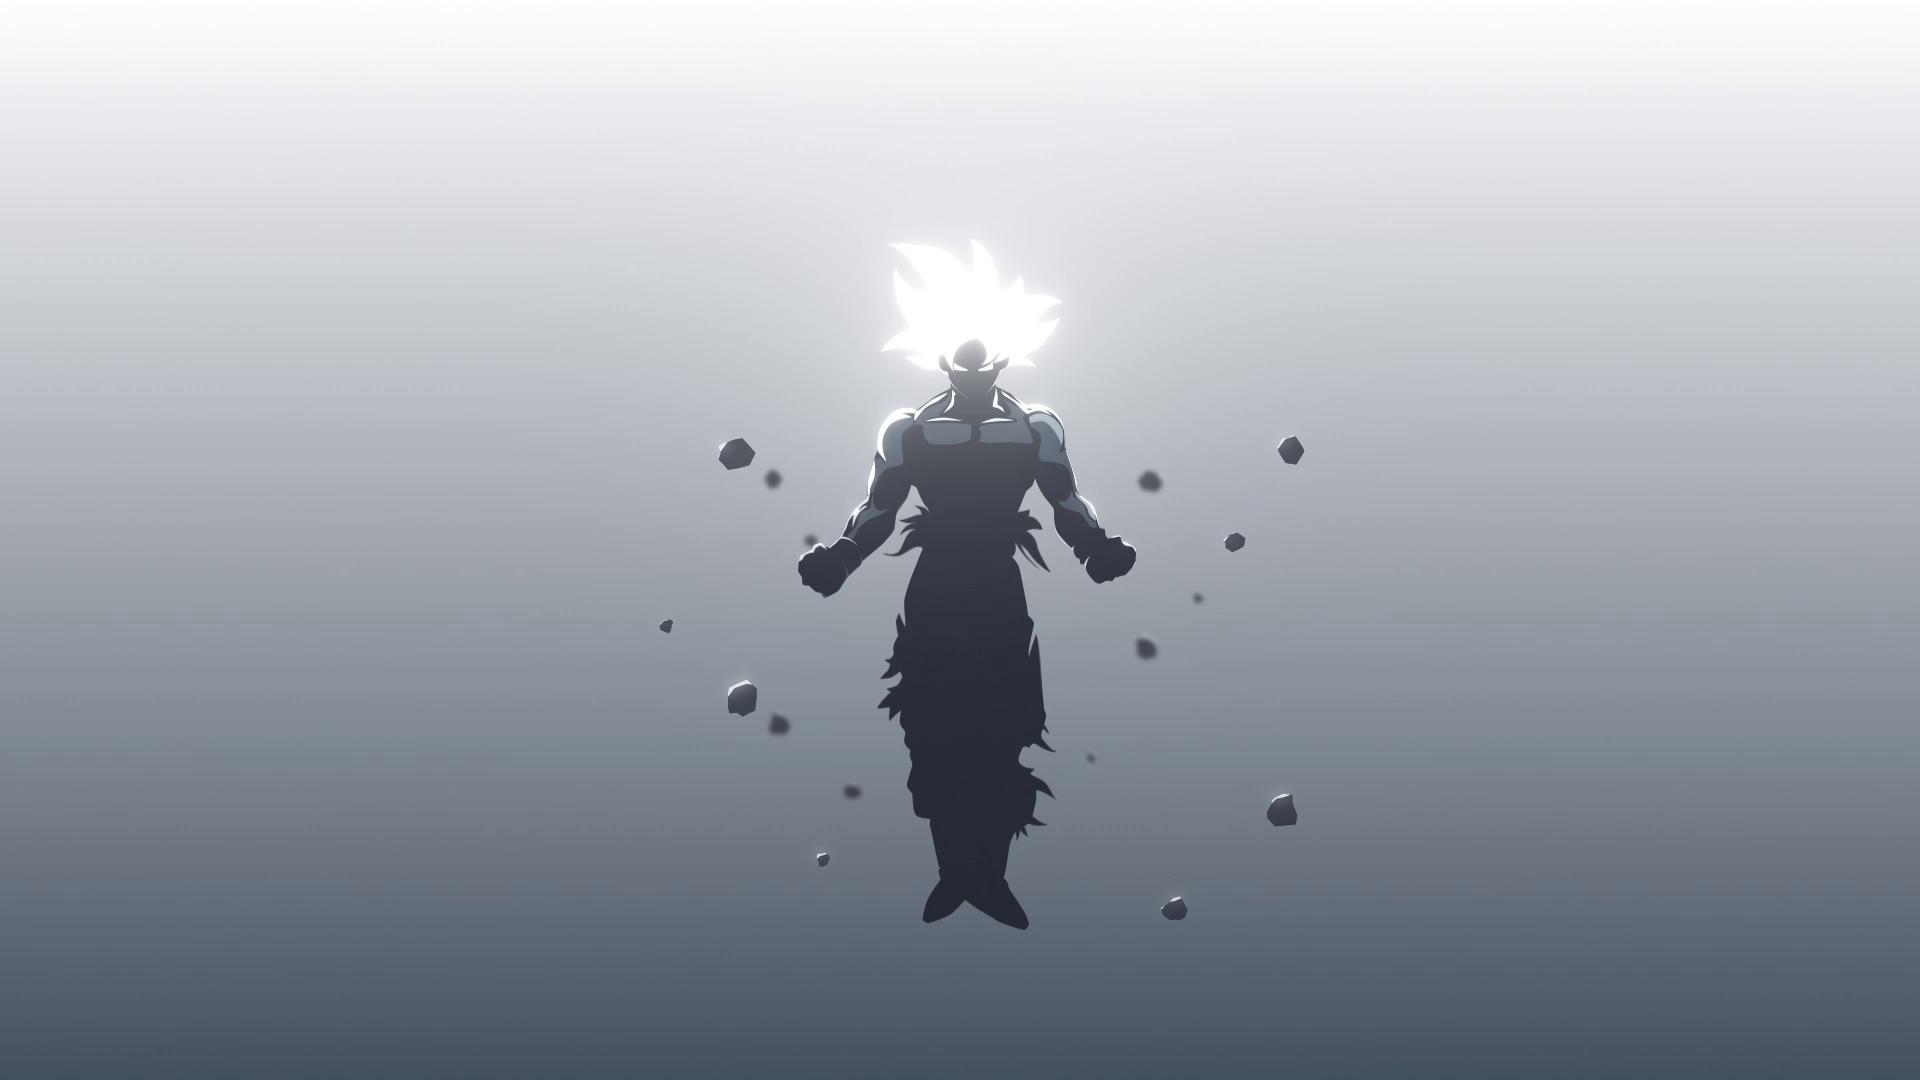 Goku Ultra Instinct Live Wallpaper